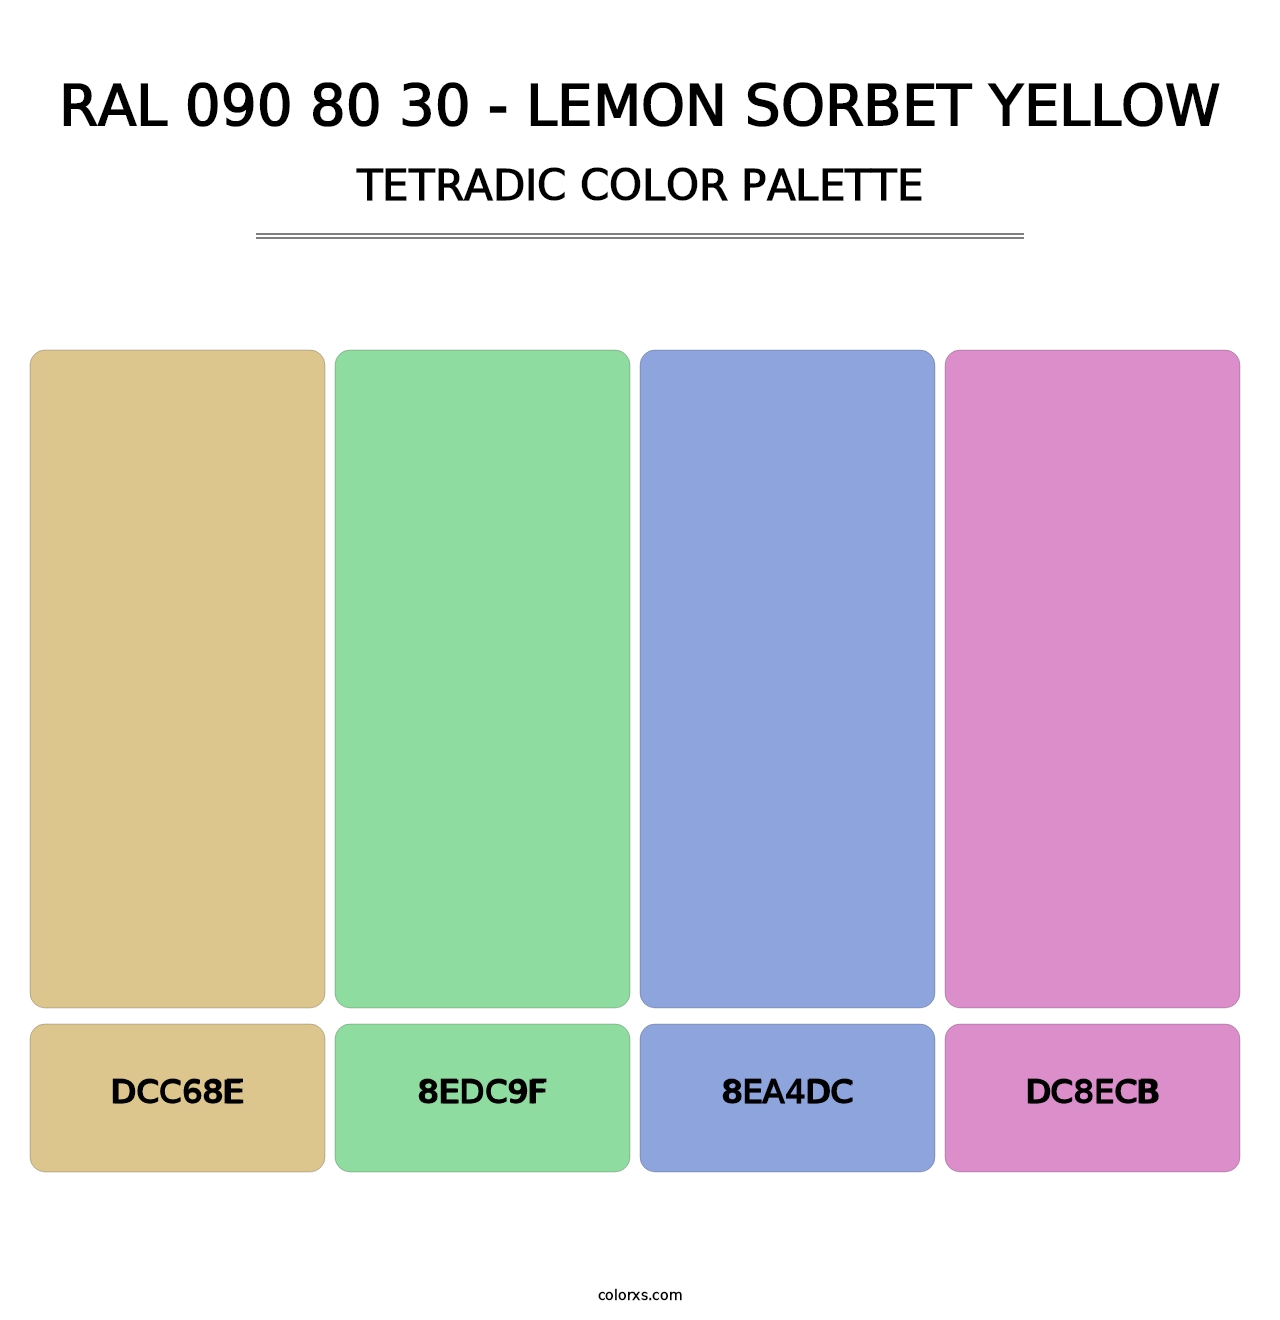 RAL 090 80 30 - Lemon Sorbet Yellow - Tetradic Color Palette